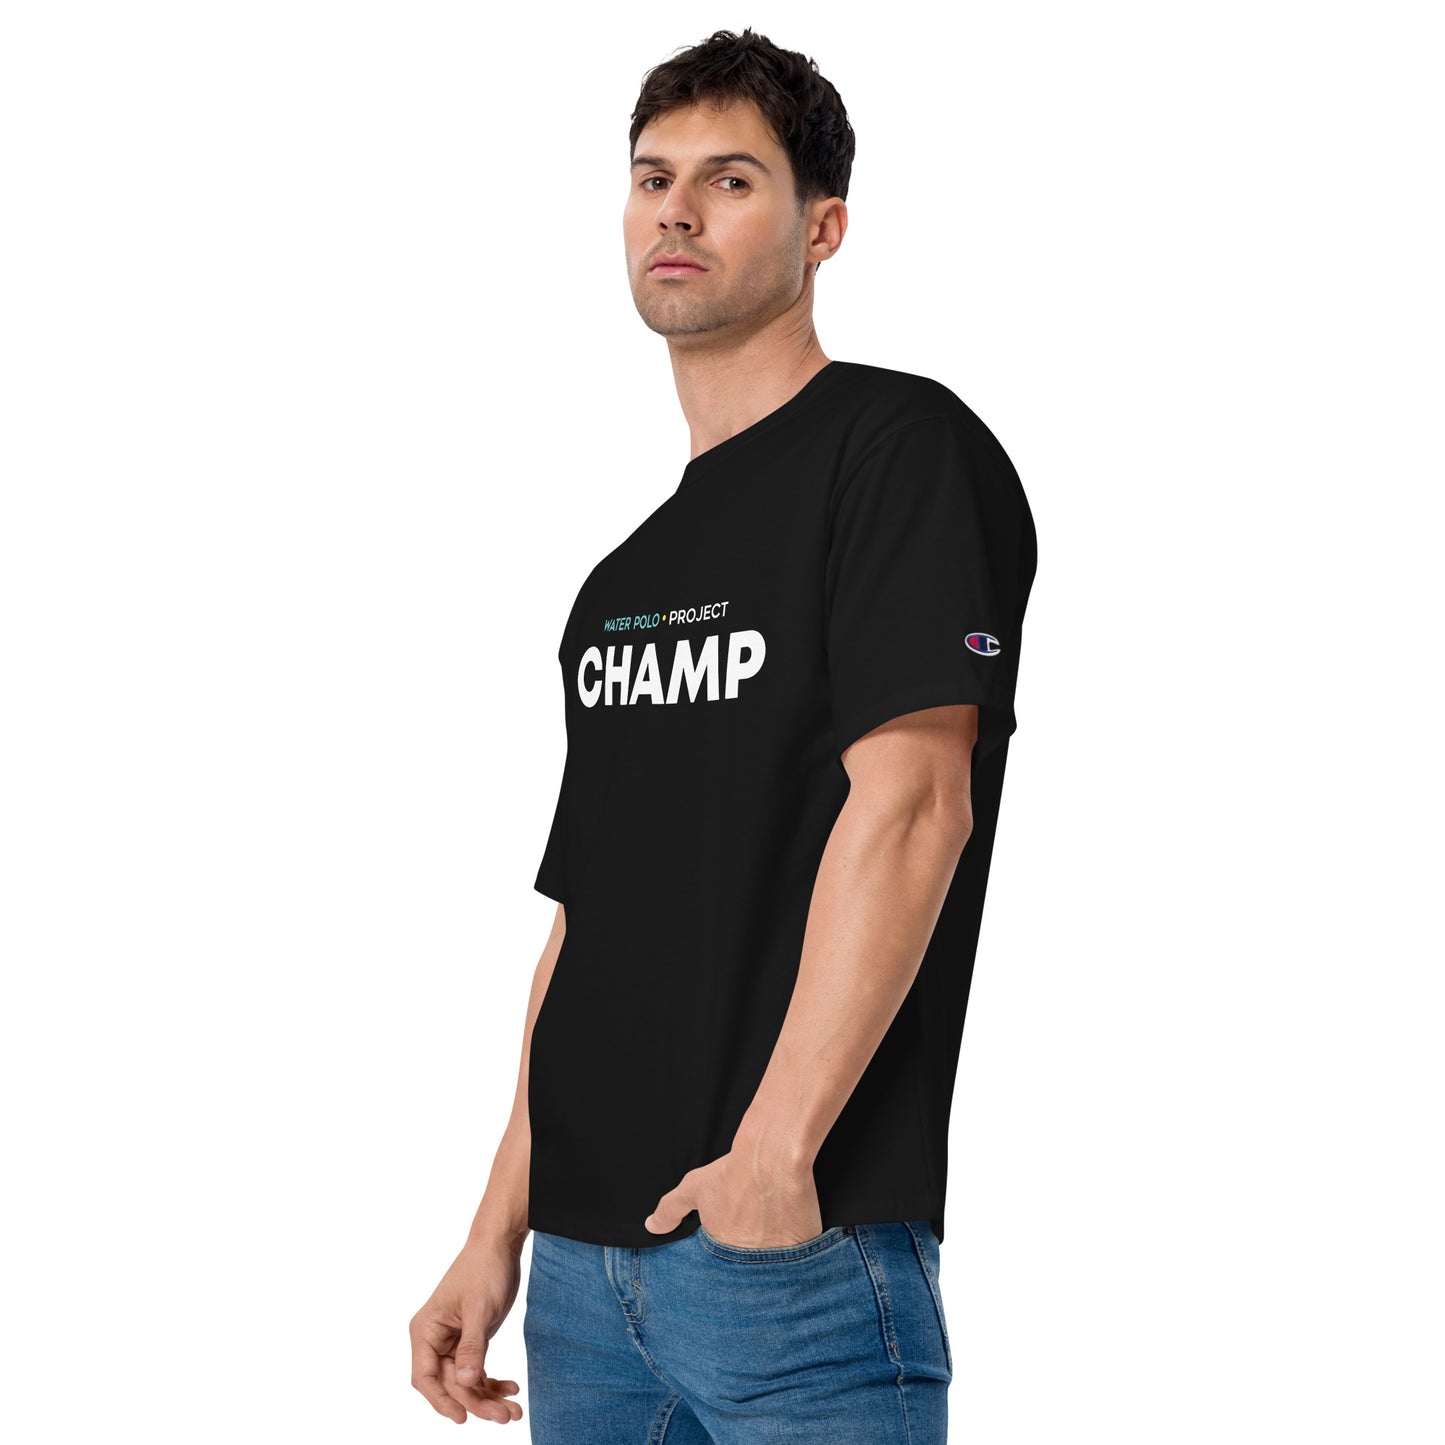 Aqua Legion x Champion Black t-shirt